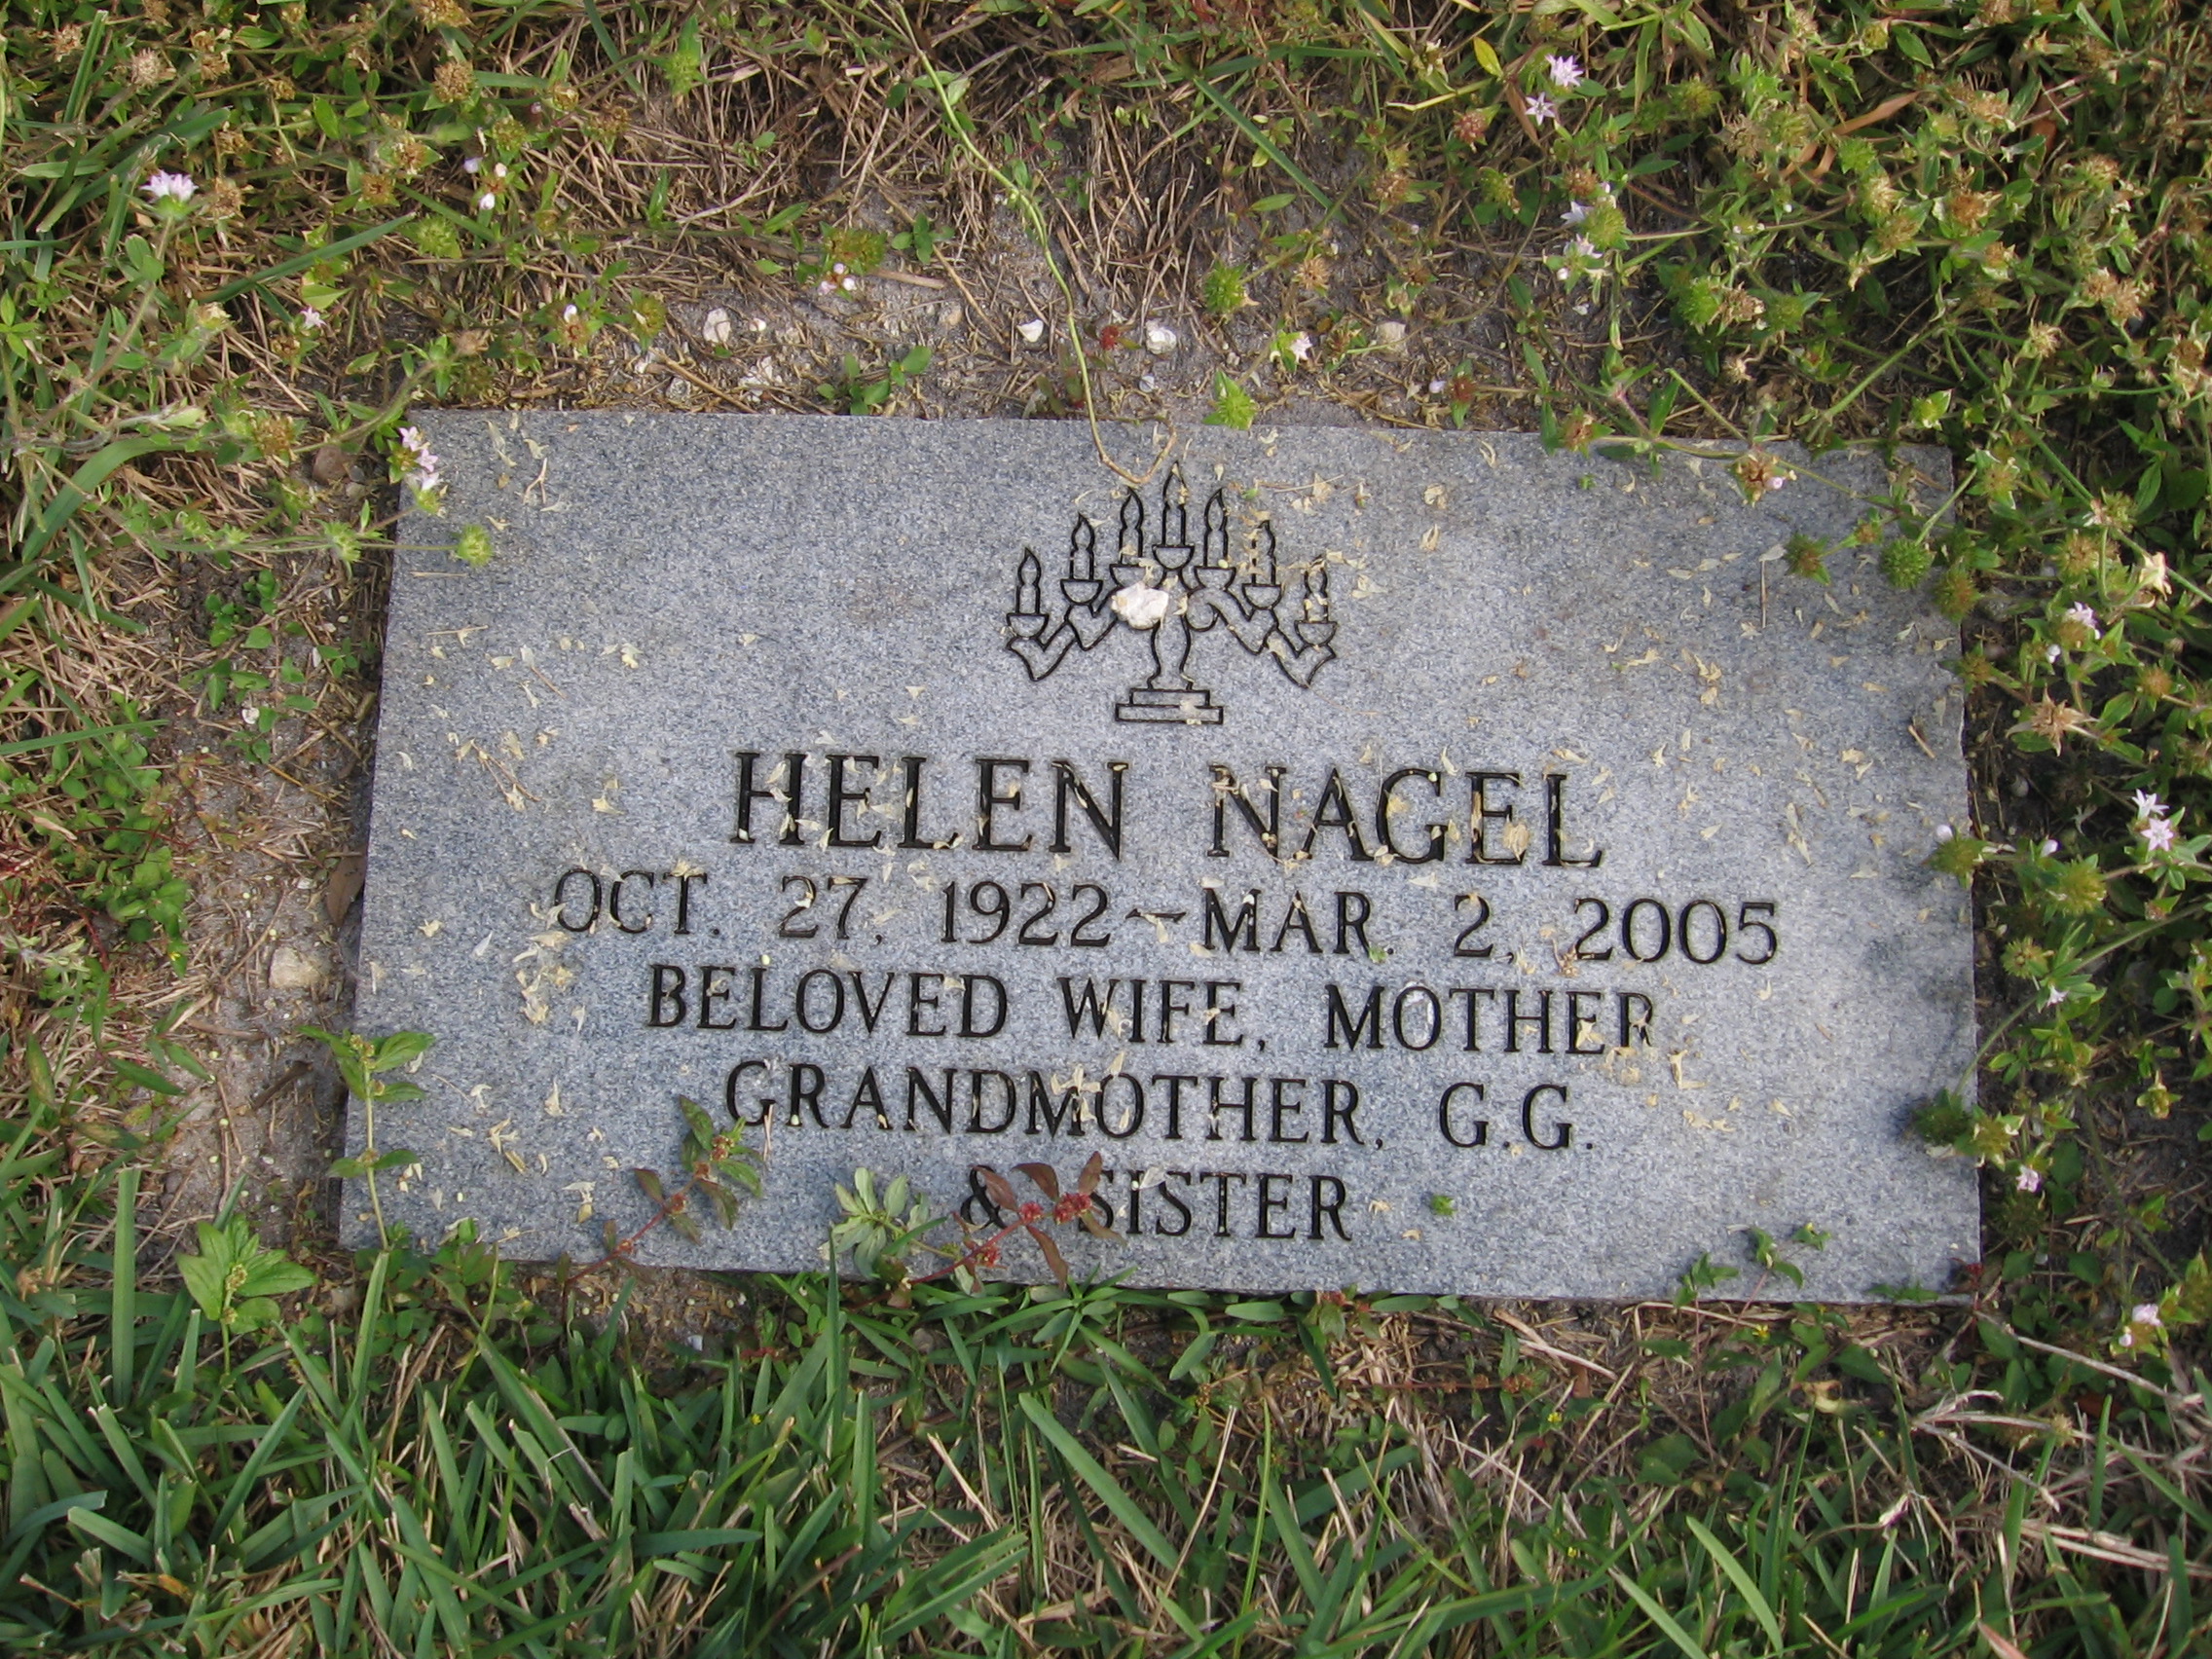 Helen Nagel